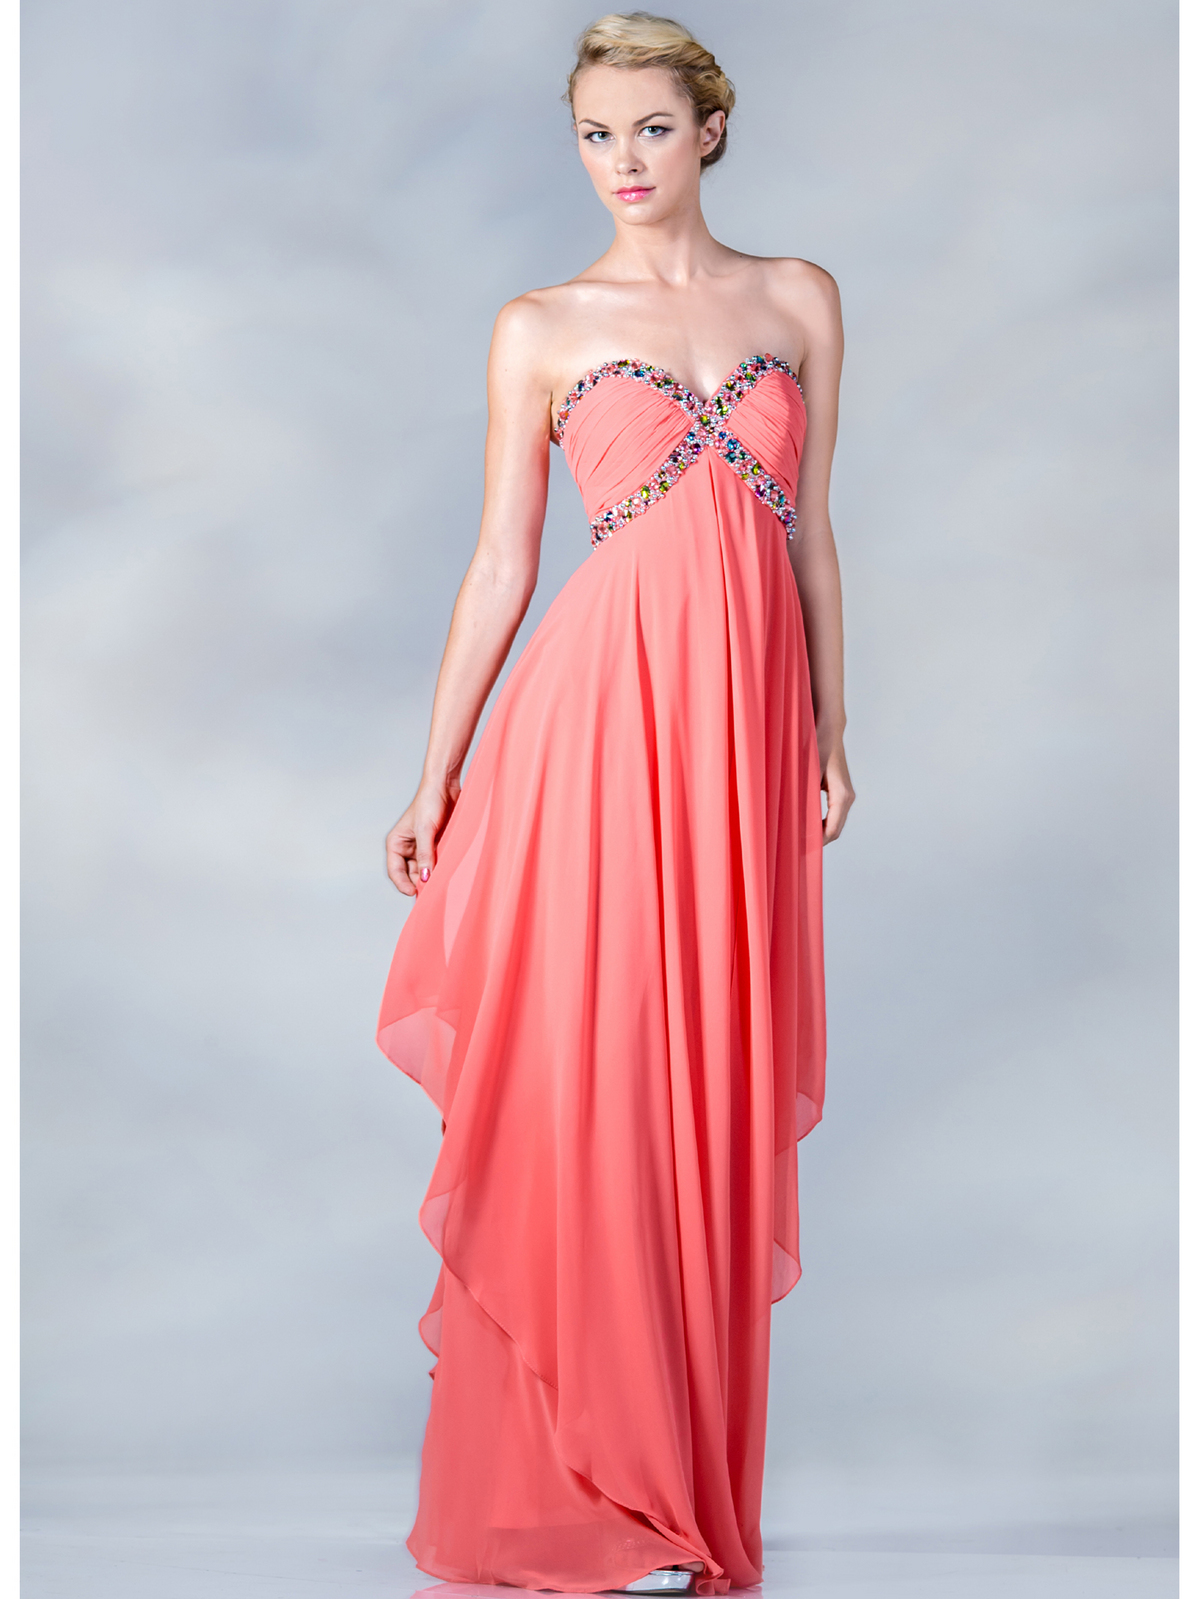 Short Coral Prom Dress | DressedUpGirl.com